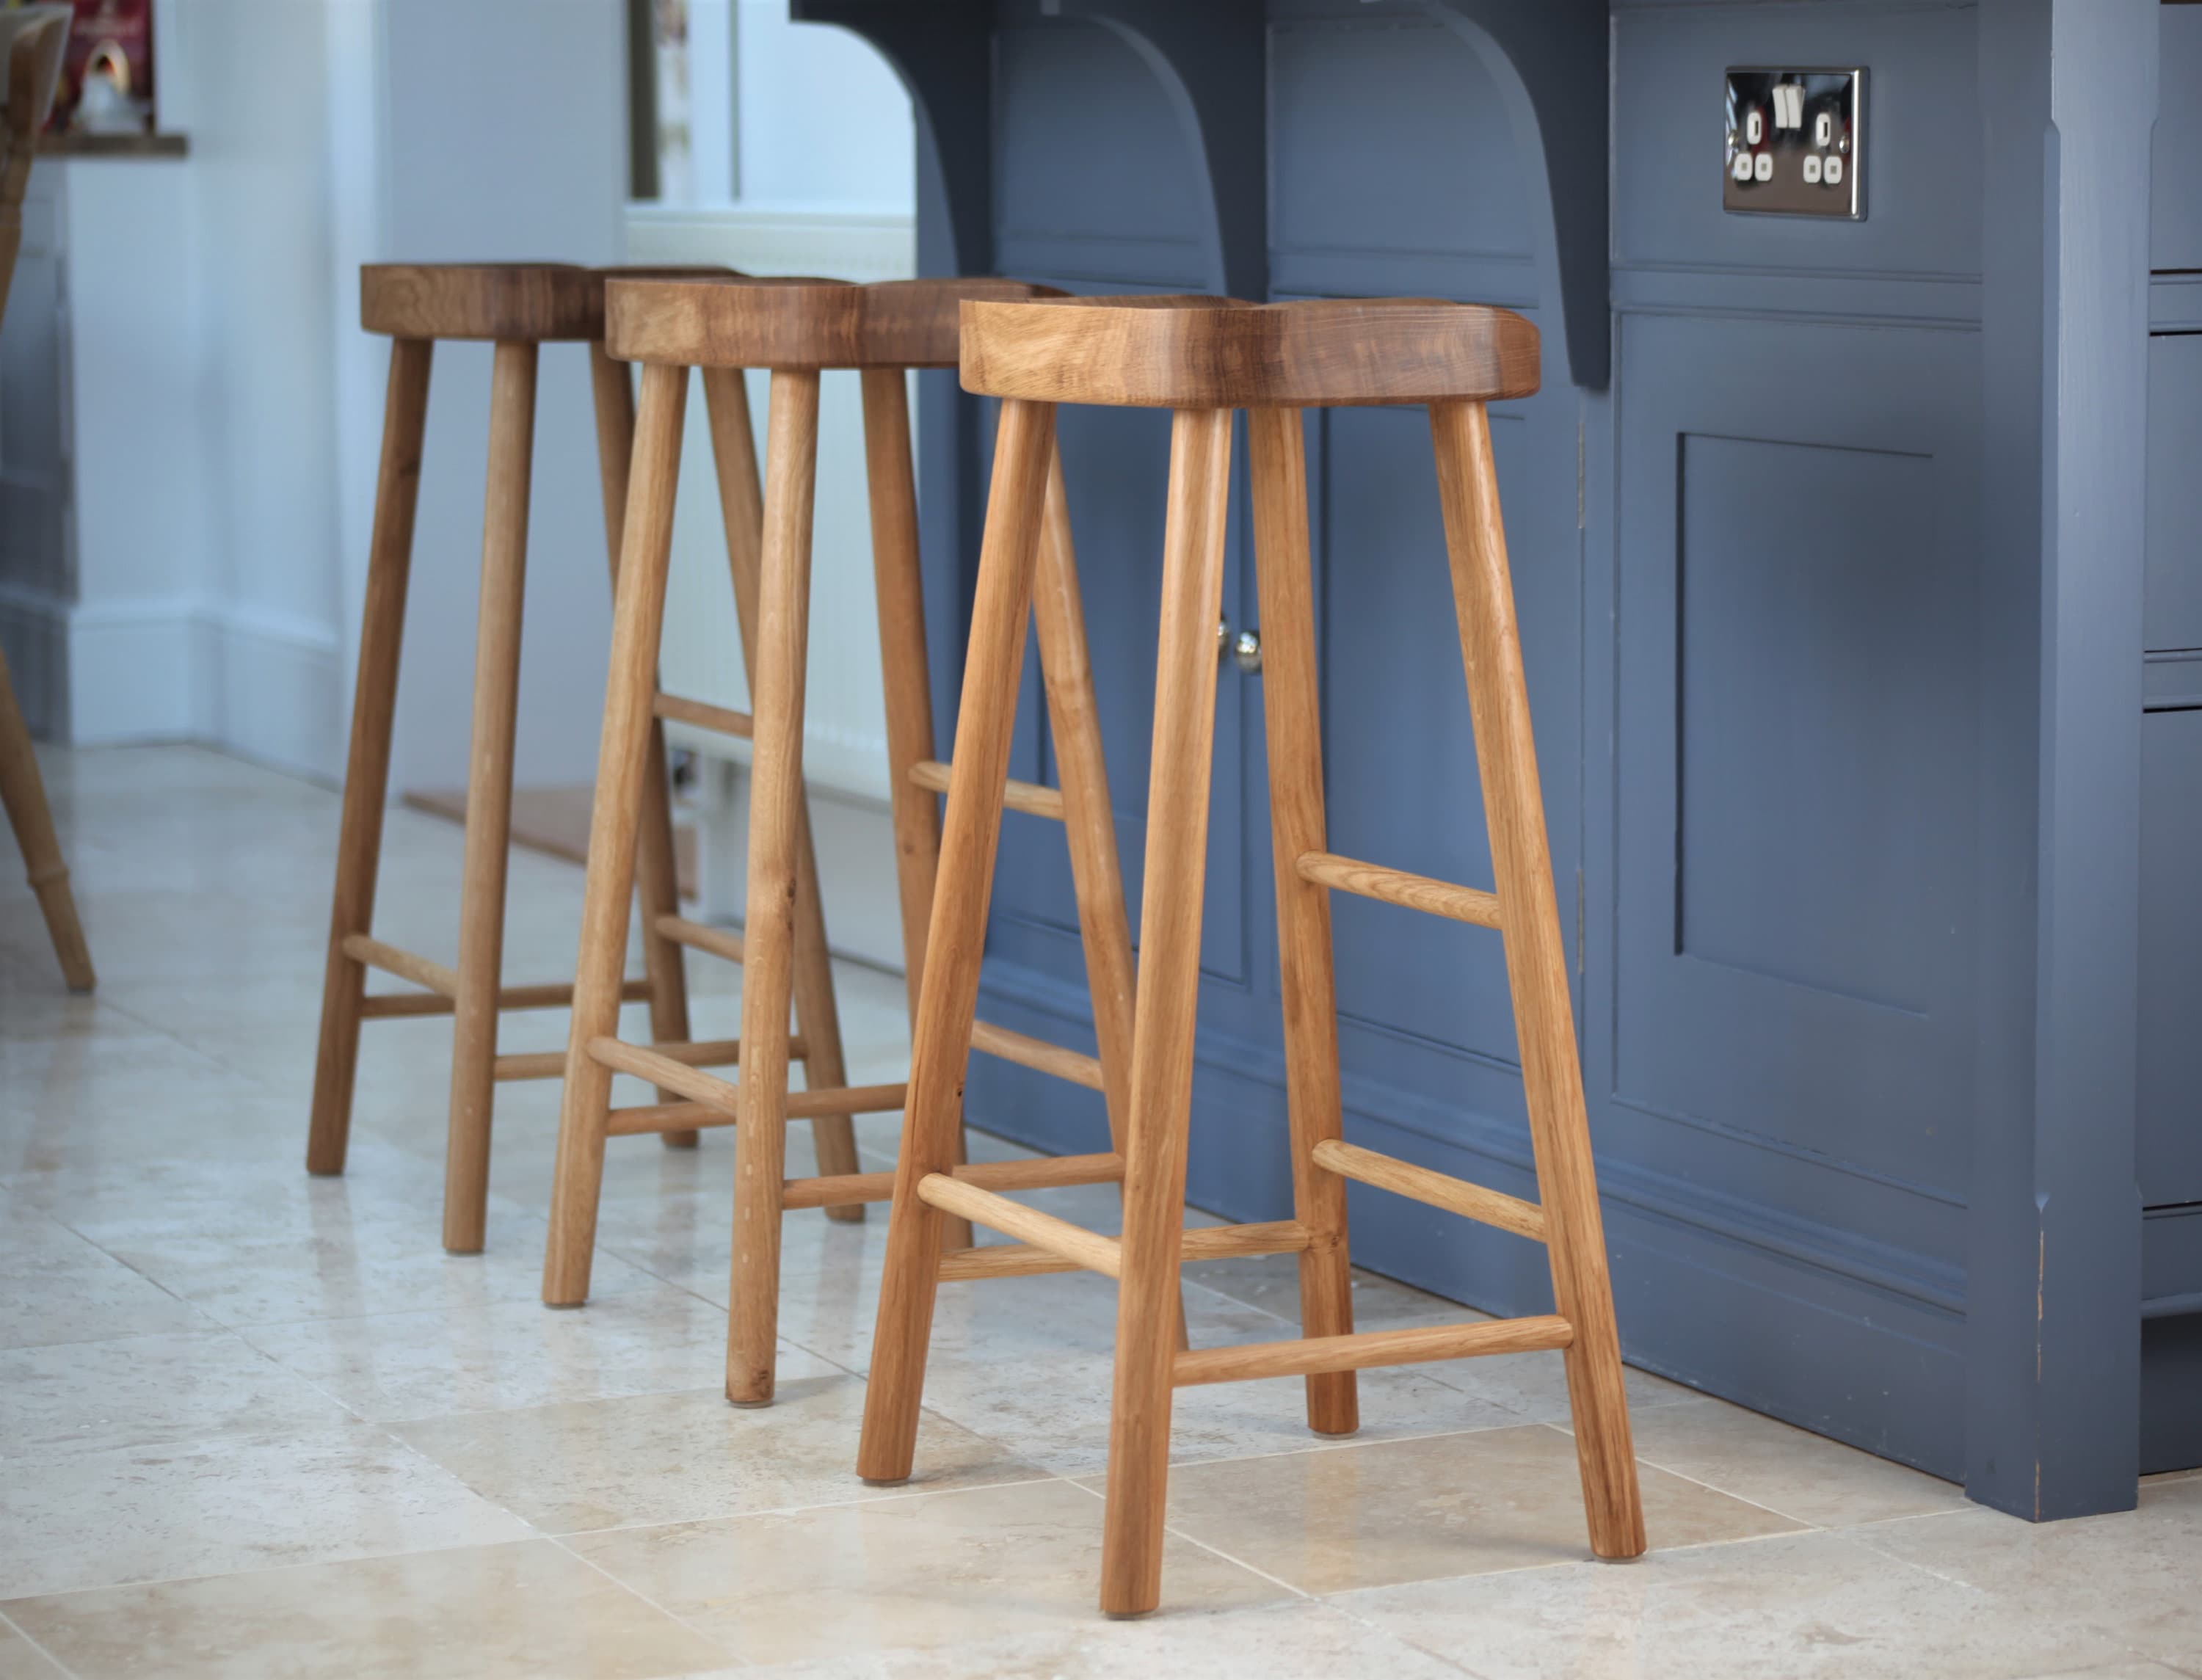 oak kitchen bar stools uk